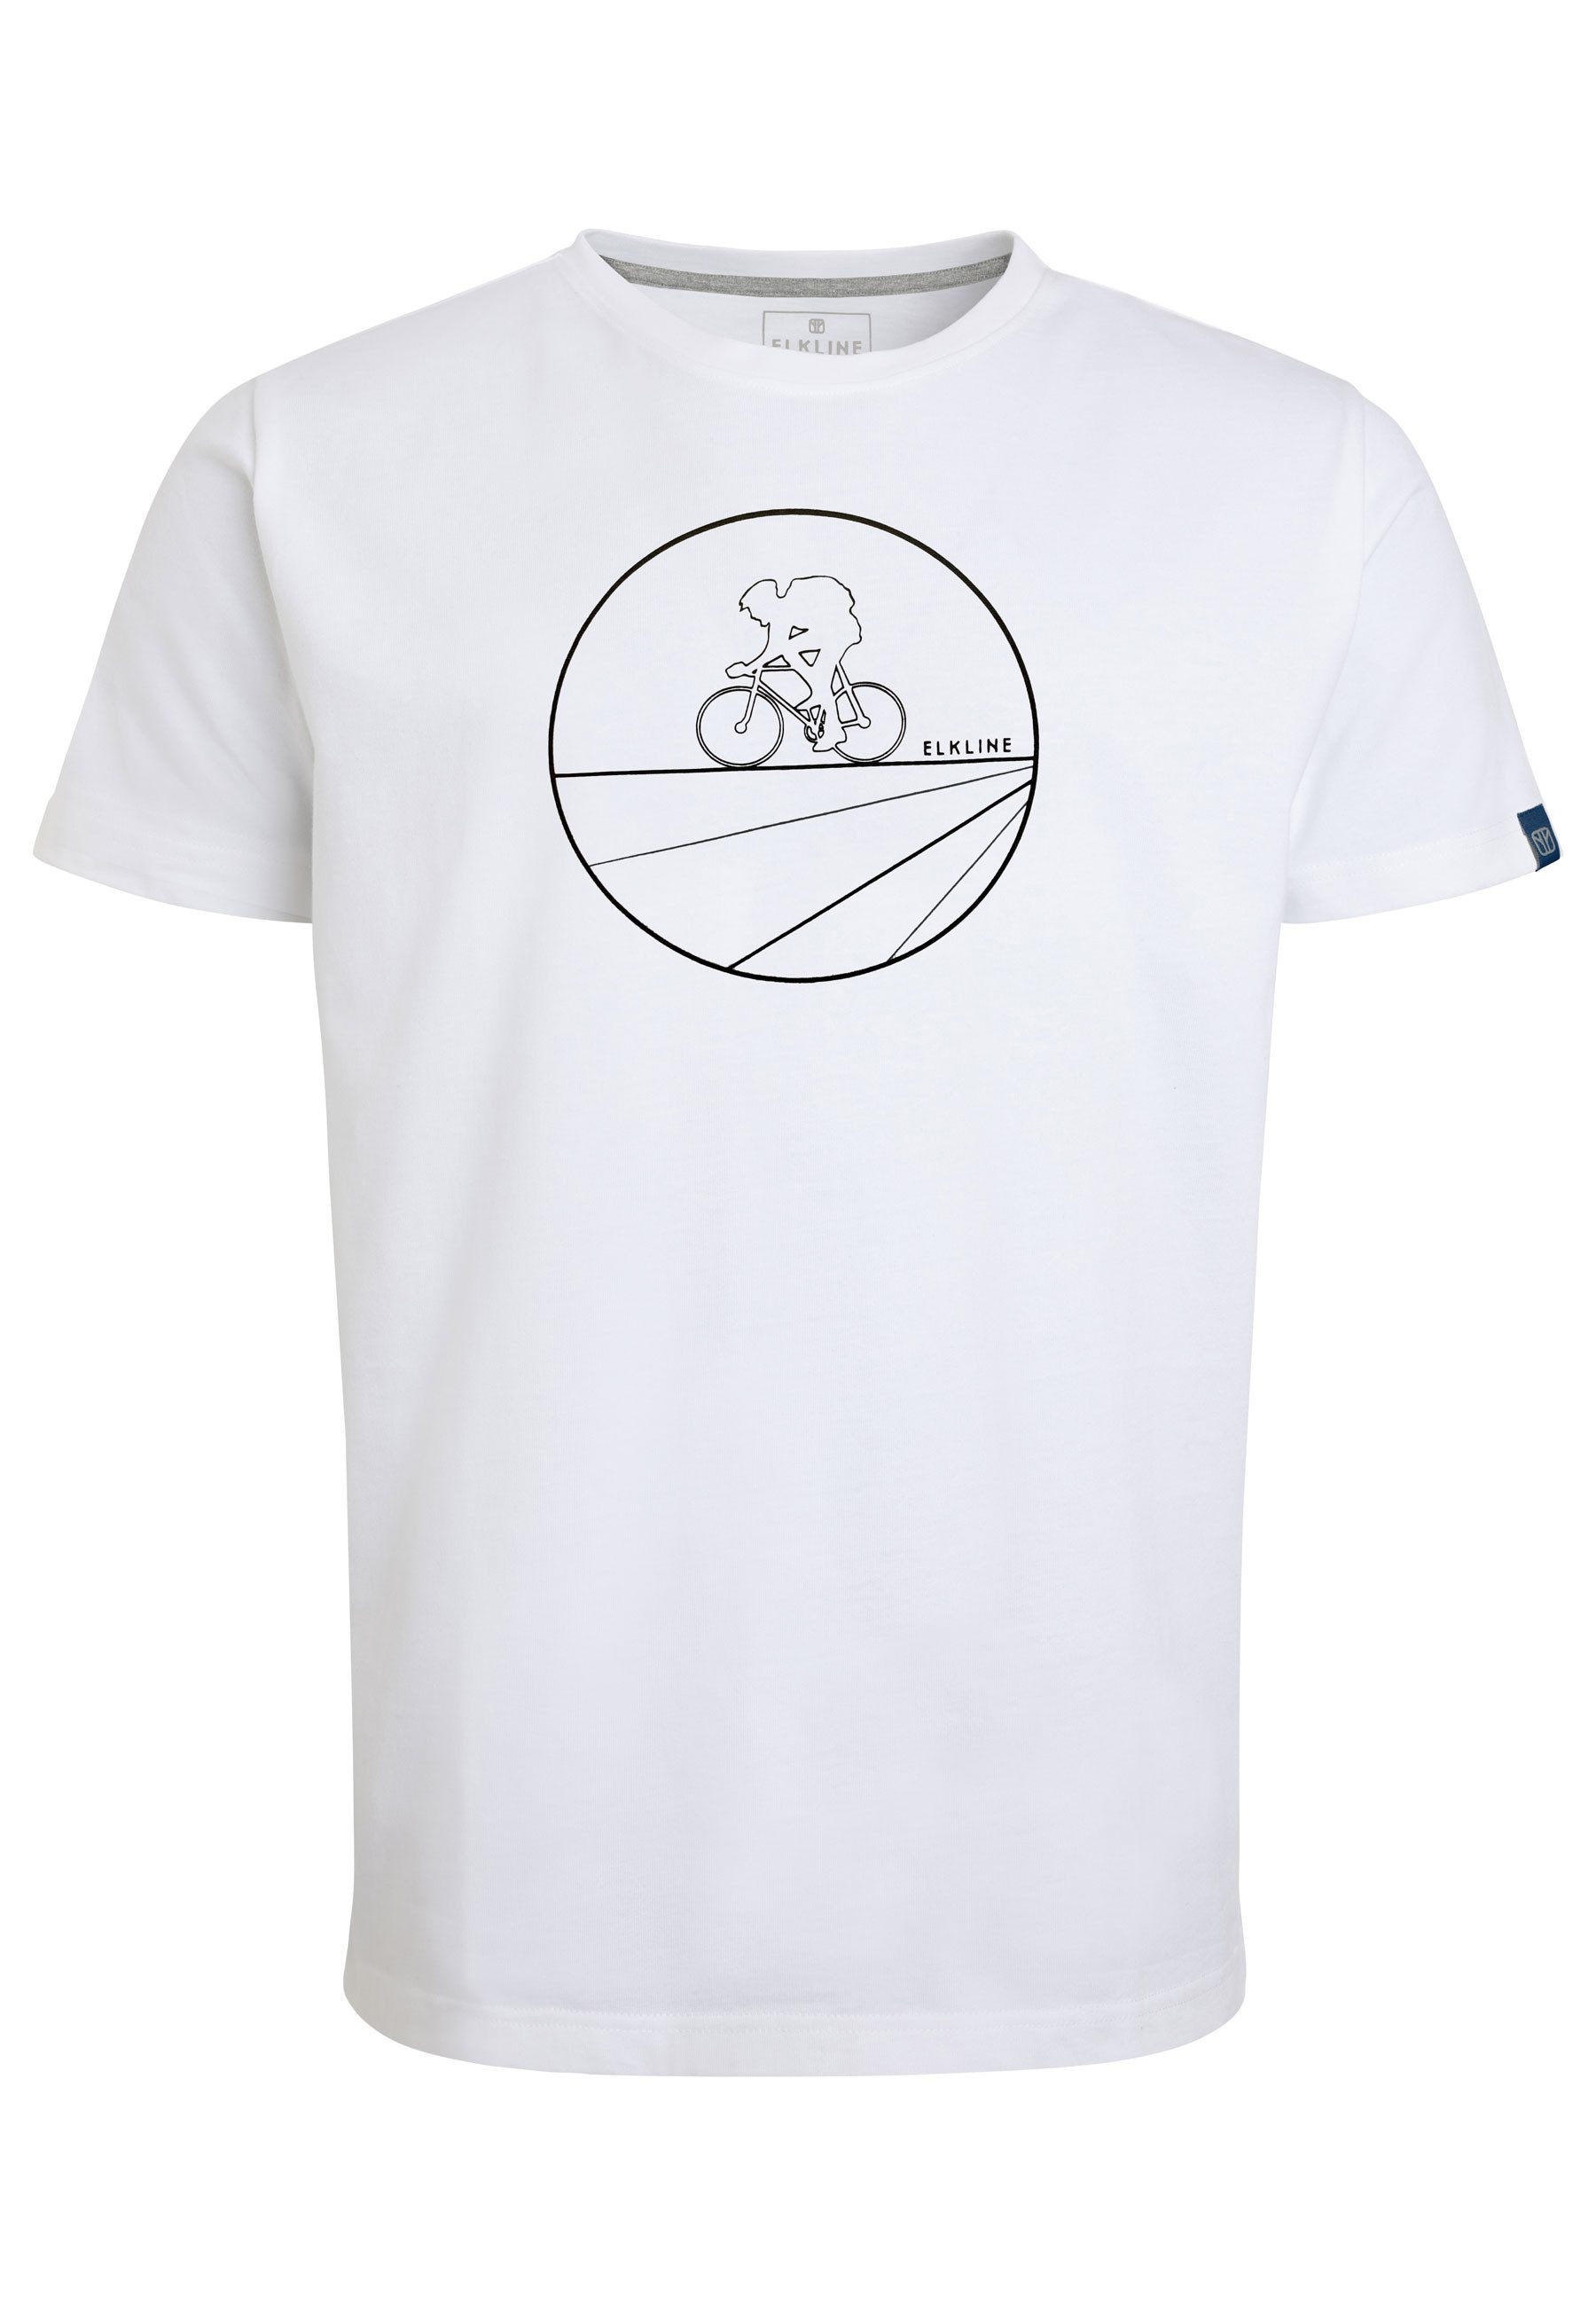 Elkline T-Shirt Straight Forward sportlich Bike Fahrrad Print Motiv Bio